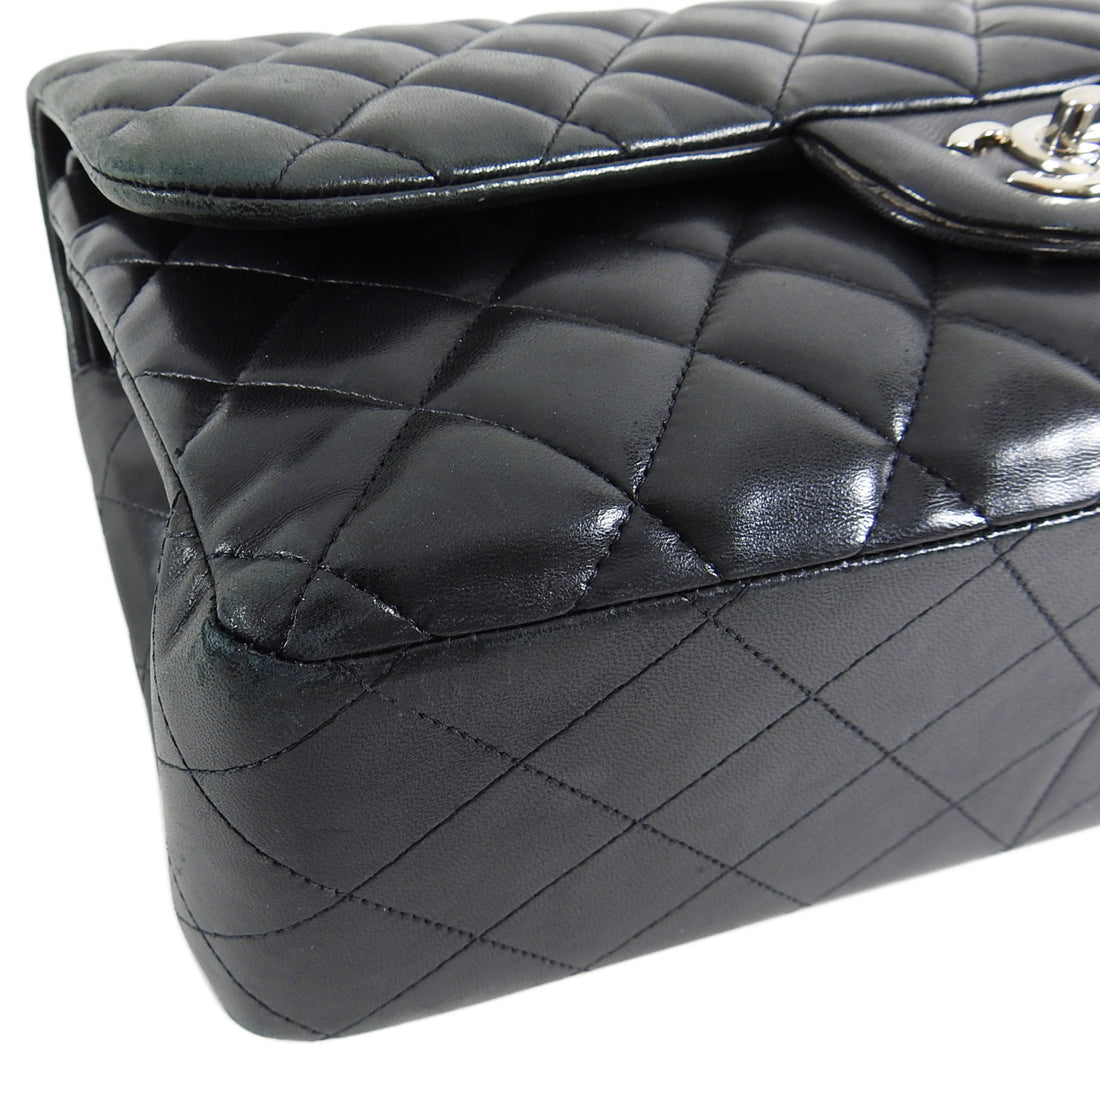 Chanel Lambskin Black Classic Jumbo Double Flap Silver Bag